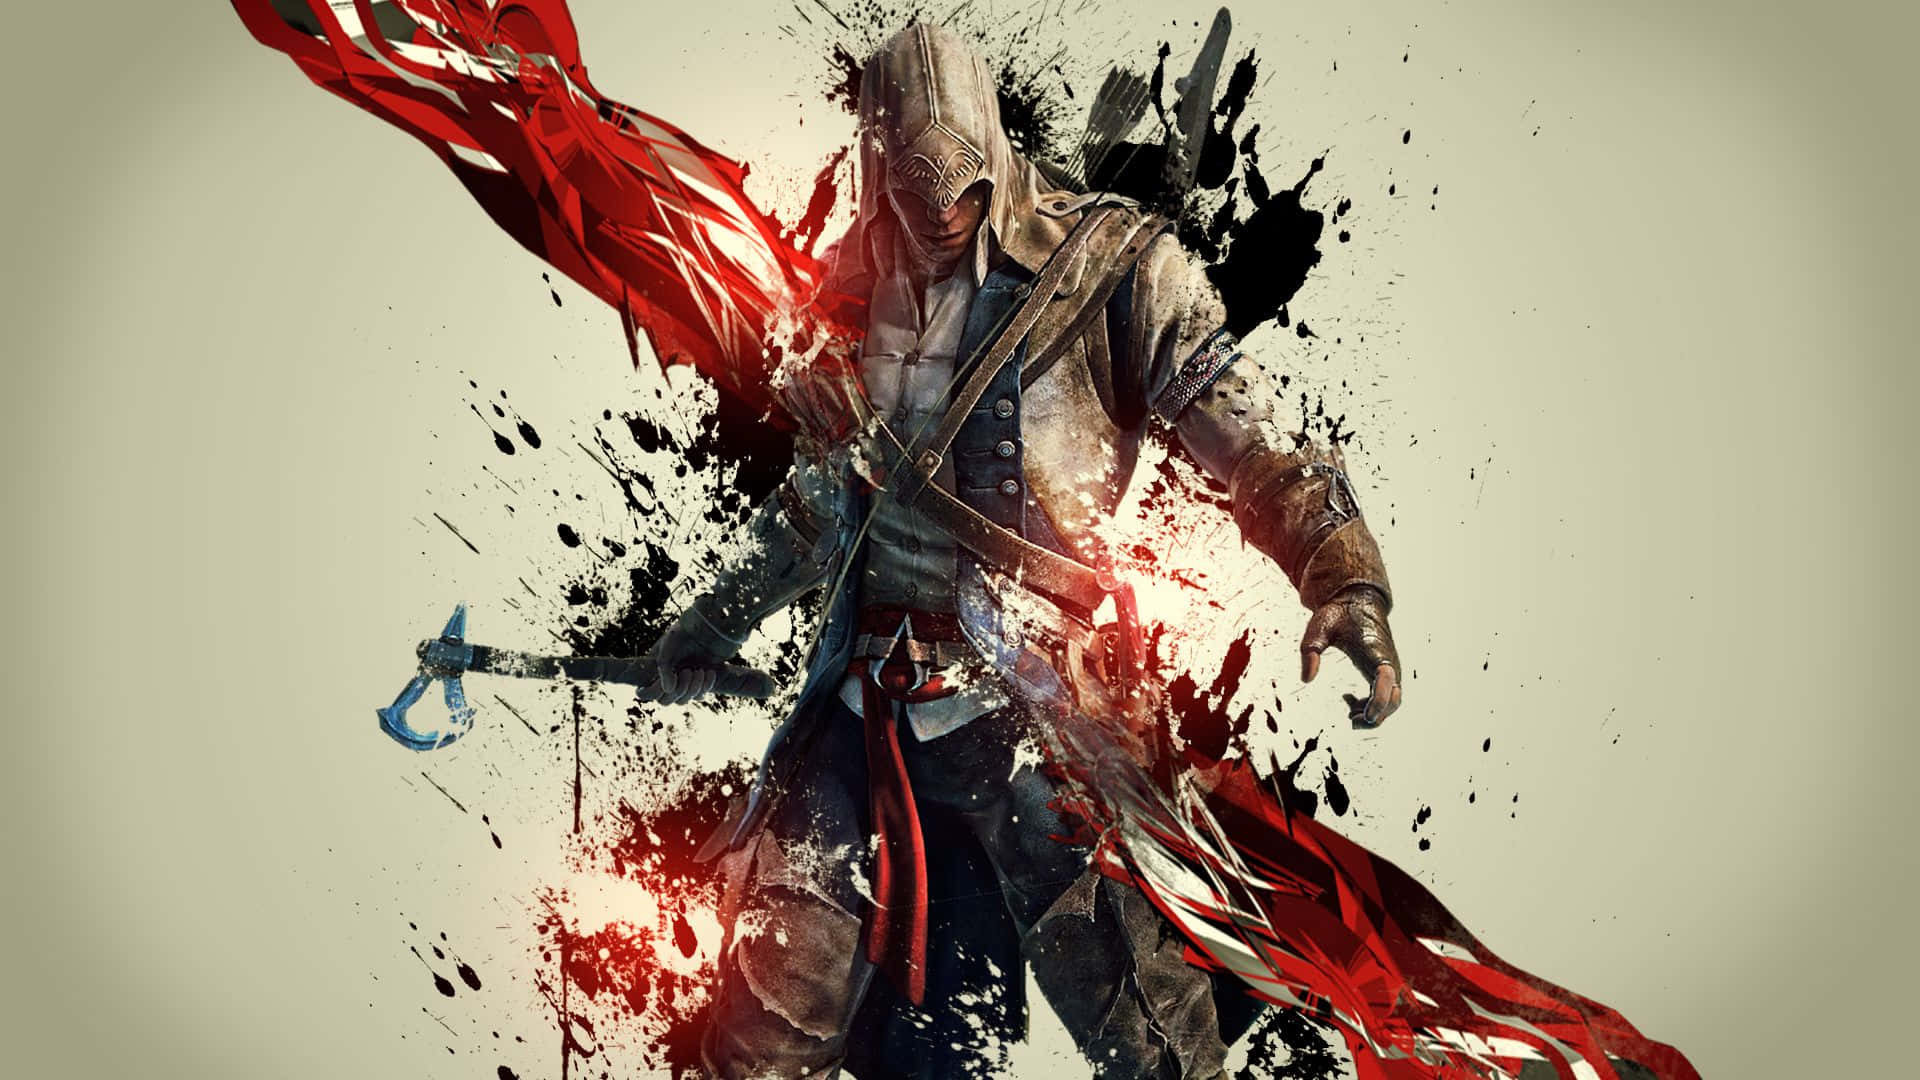 Fondosde Pantalla De Assassin's Creed Fondo de pantalla